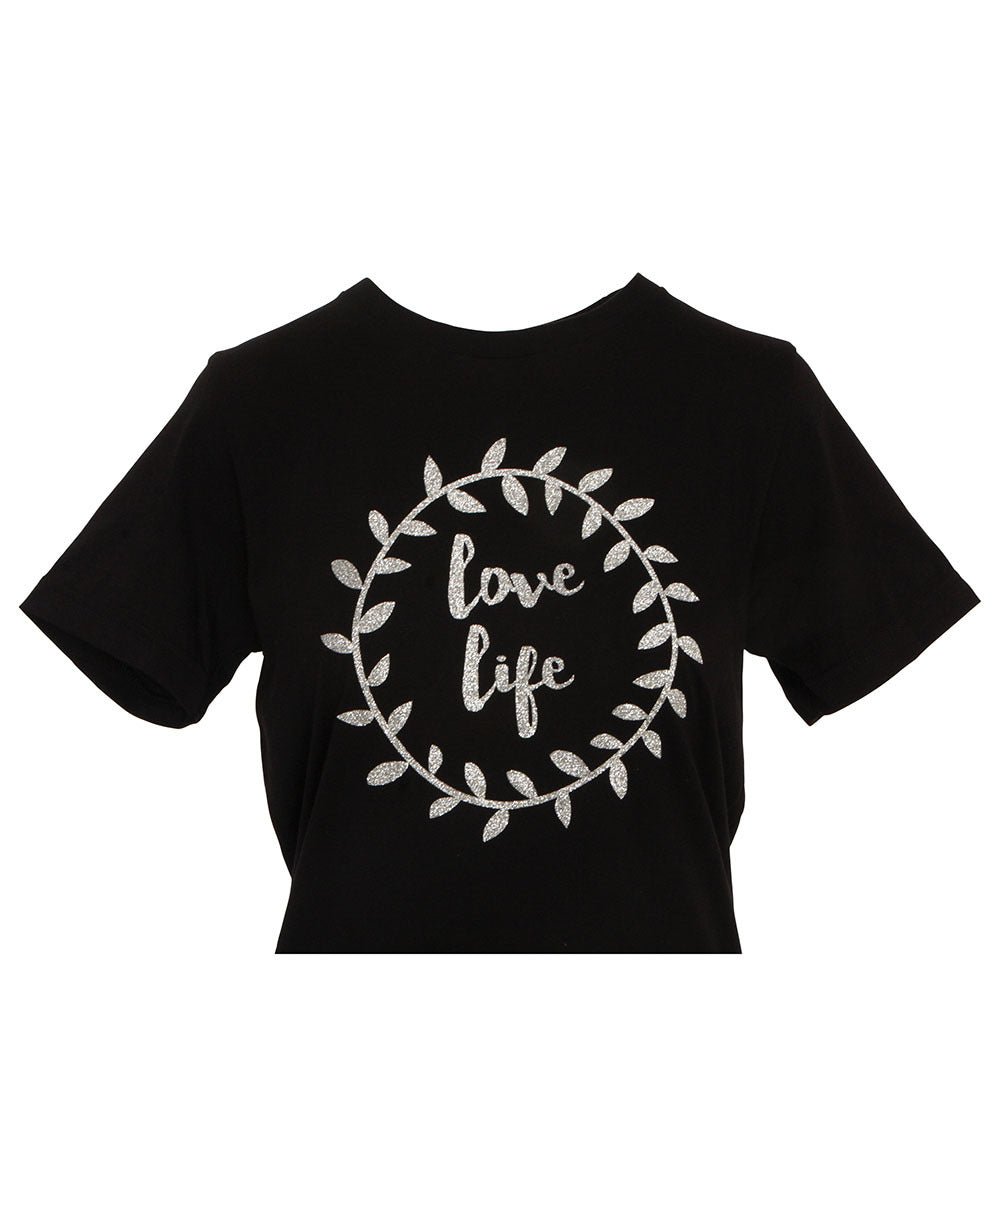 Love Life Inspirational Women’s Sparkly T-shirt - Inspirational Apparel S